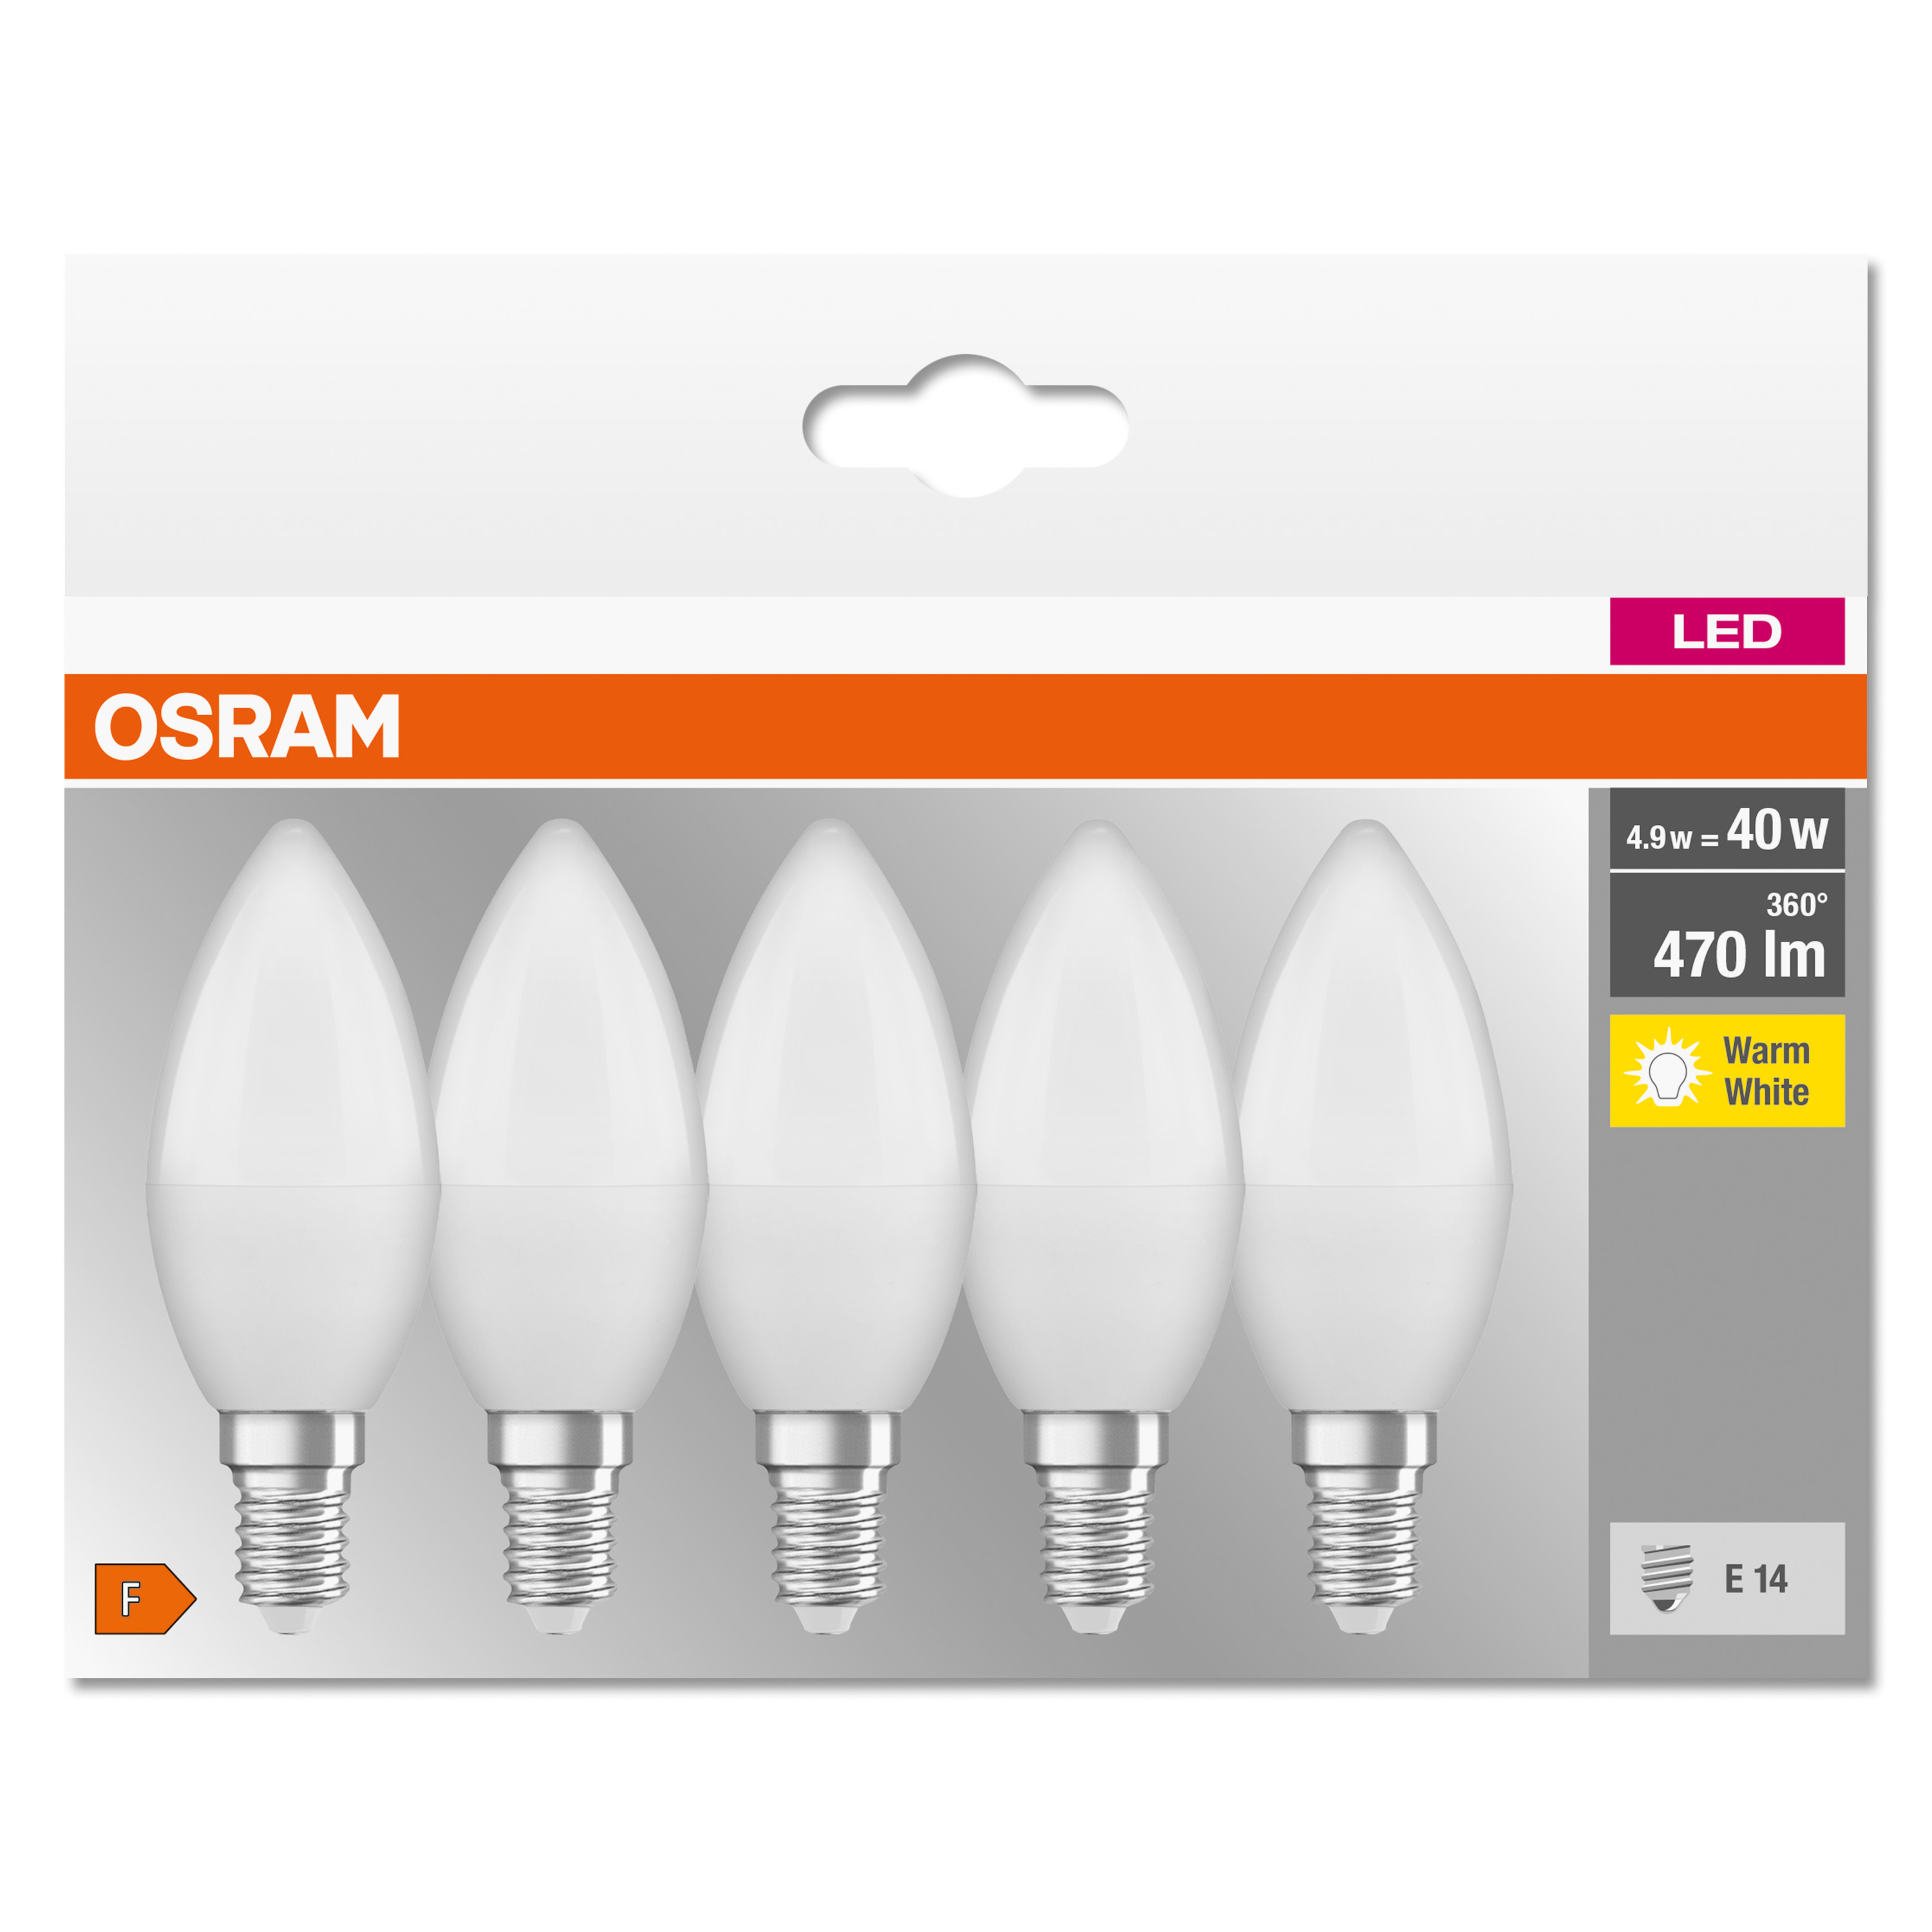 Warmweiß LED 470 BASE lumen LED B CLASSIC Lampe OSRAM 